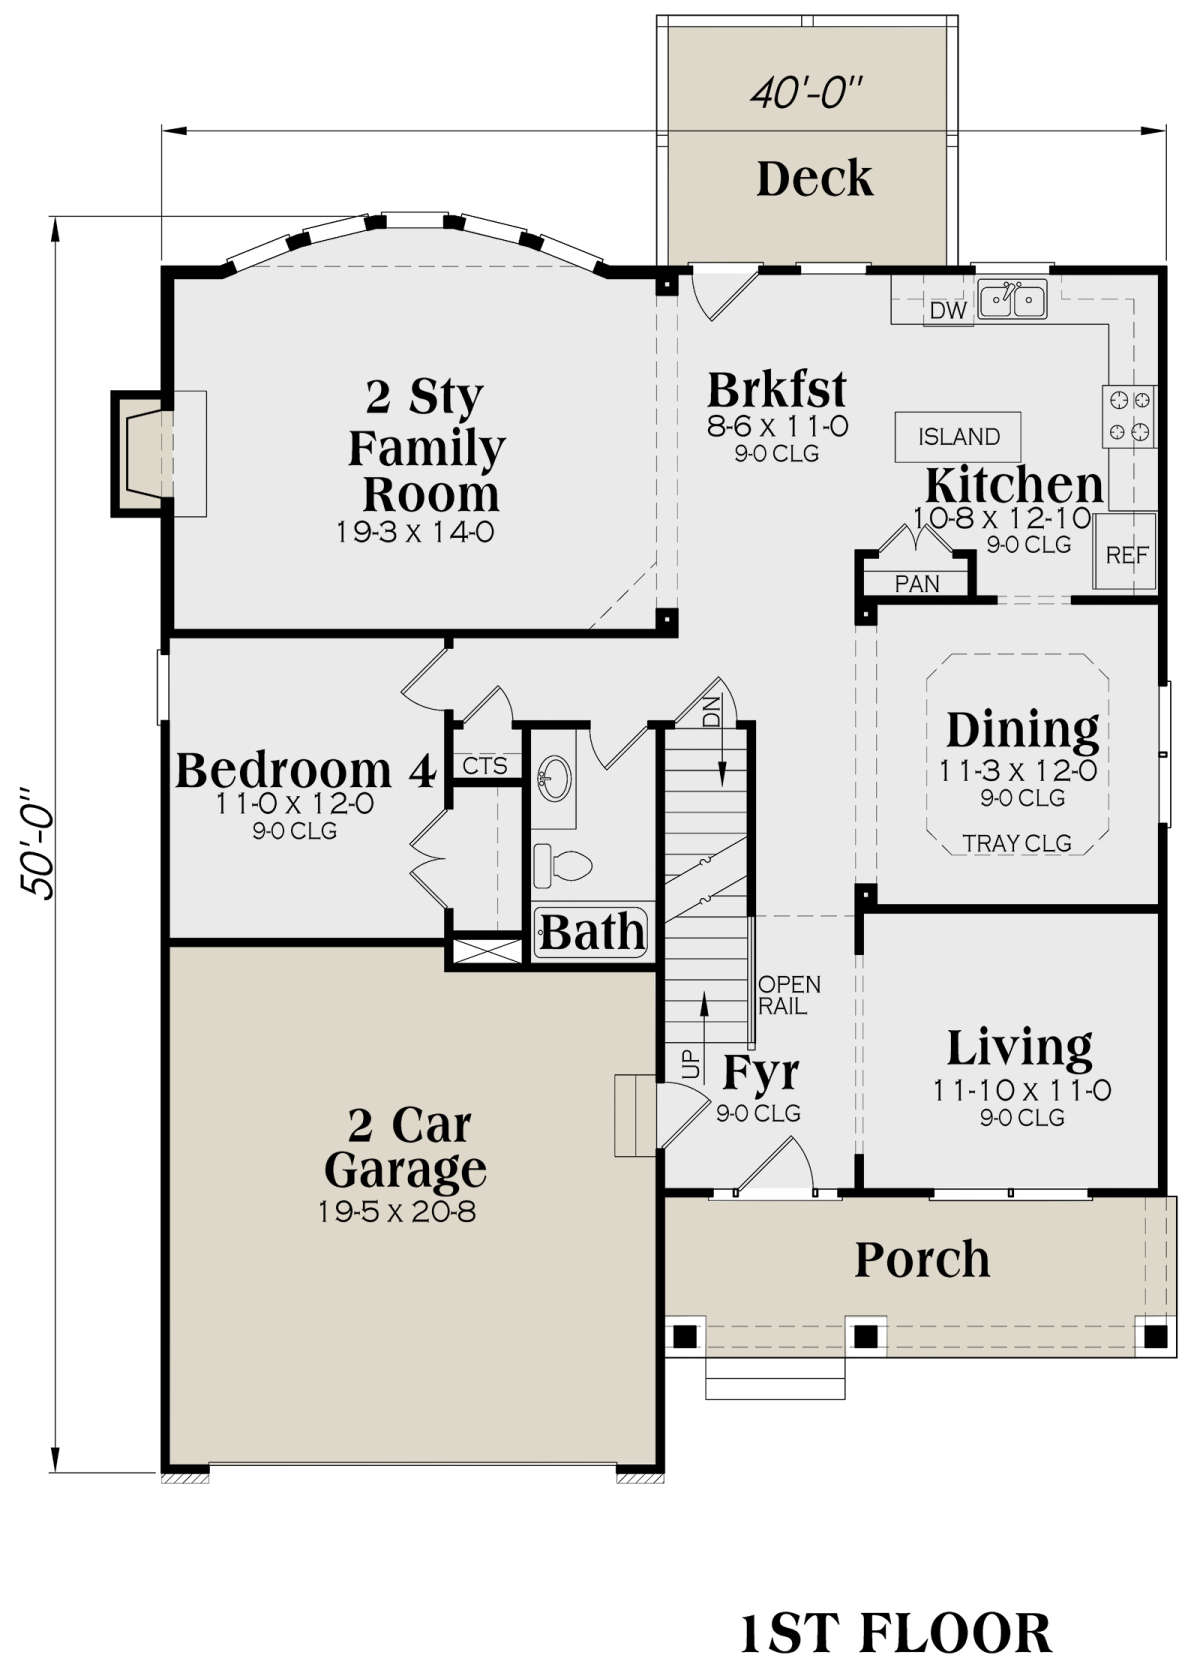 2,224 sq/ft Florida Custom Home Plan Blueprints COMPLETE SET in PDF NEW House 